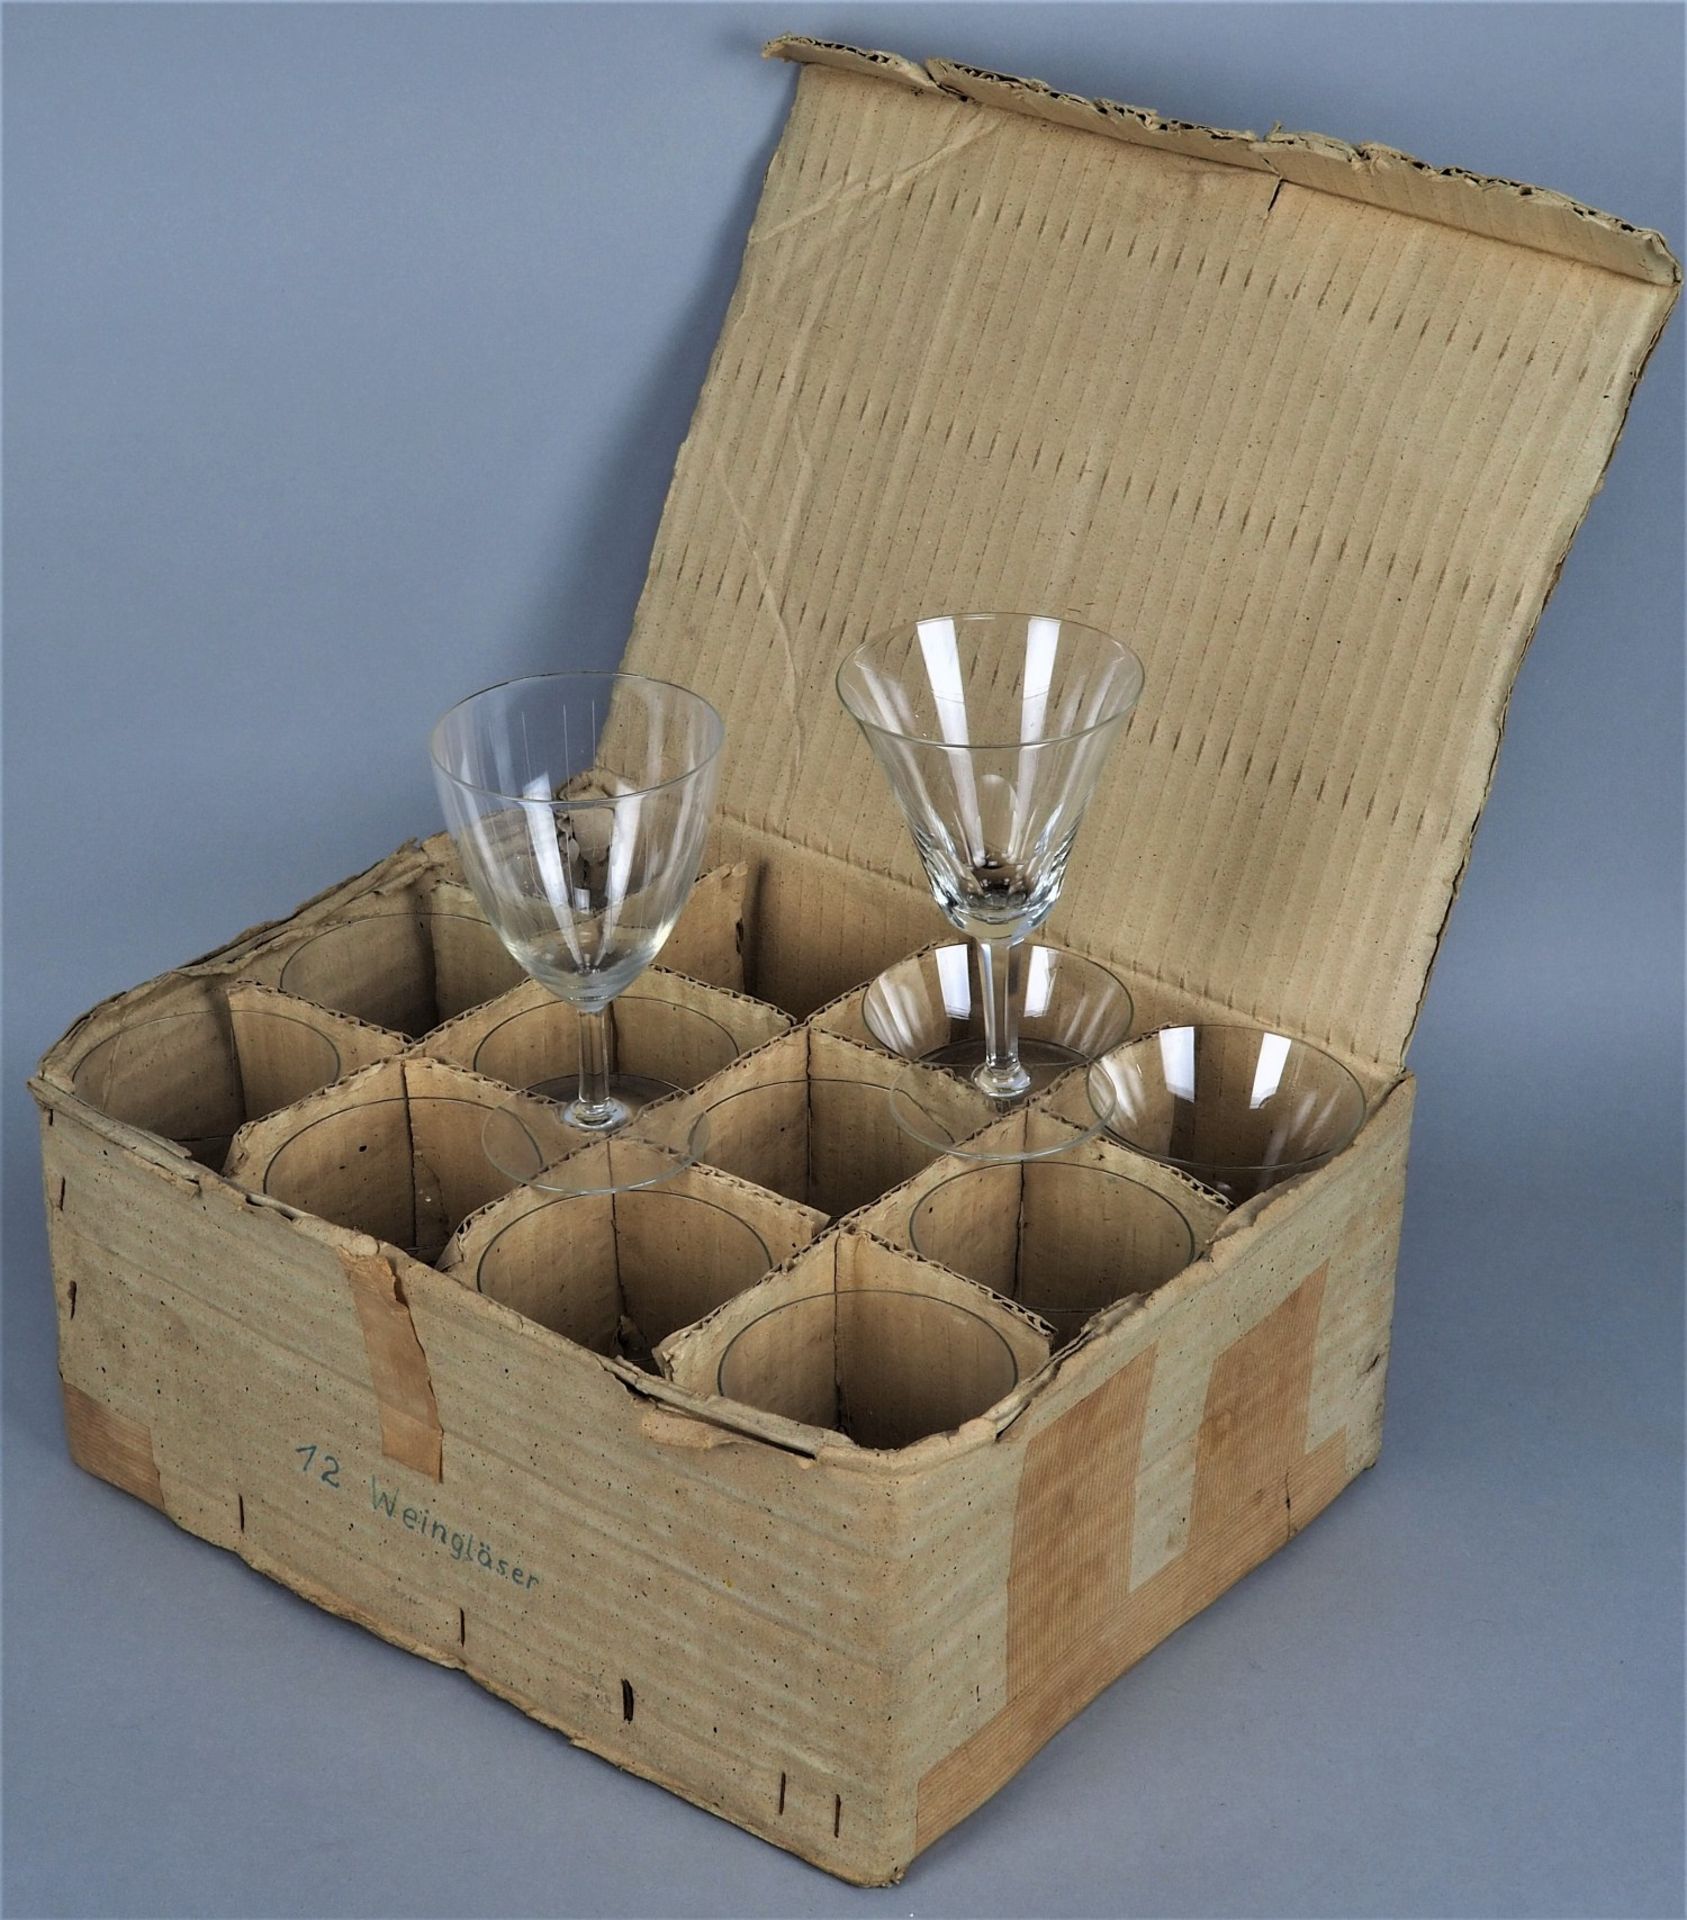 Set of wine glasses, around 1920.